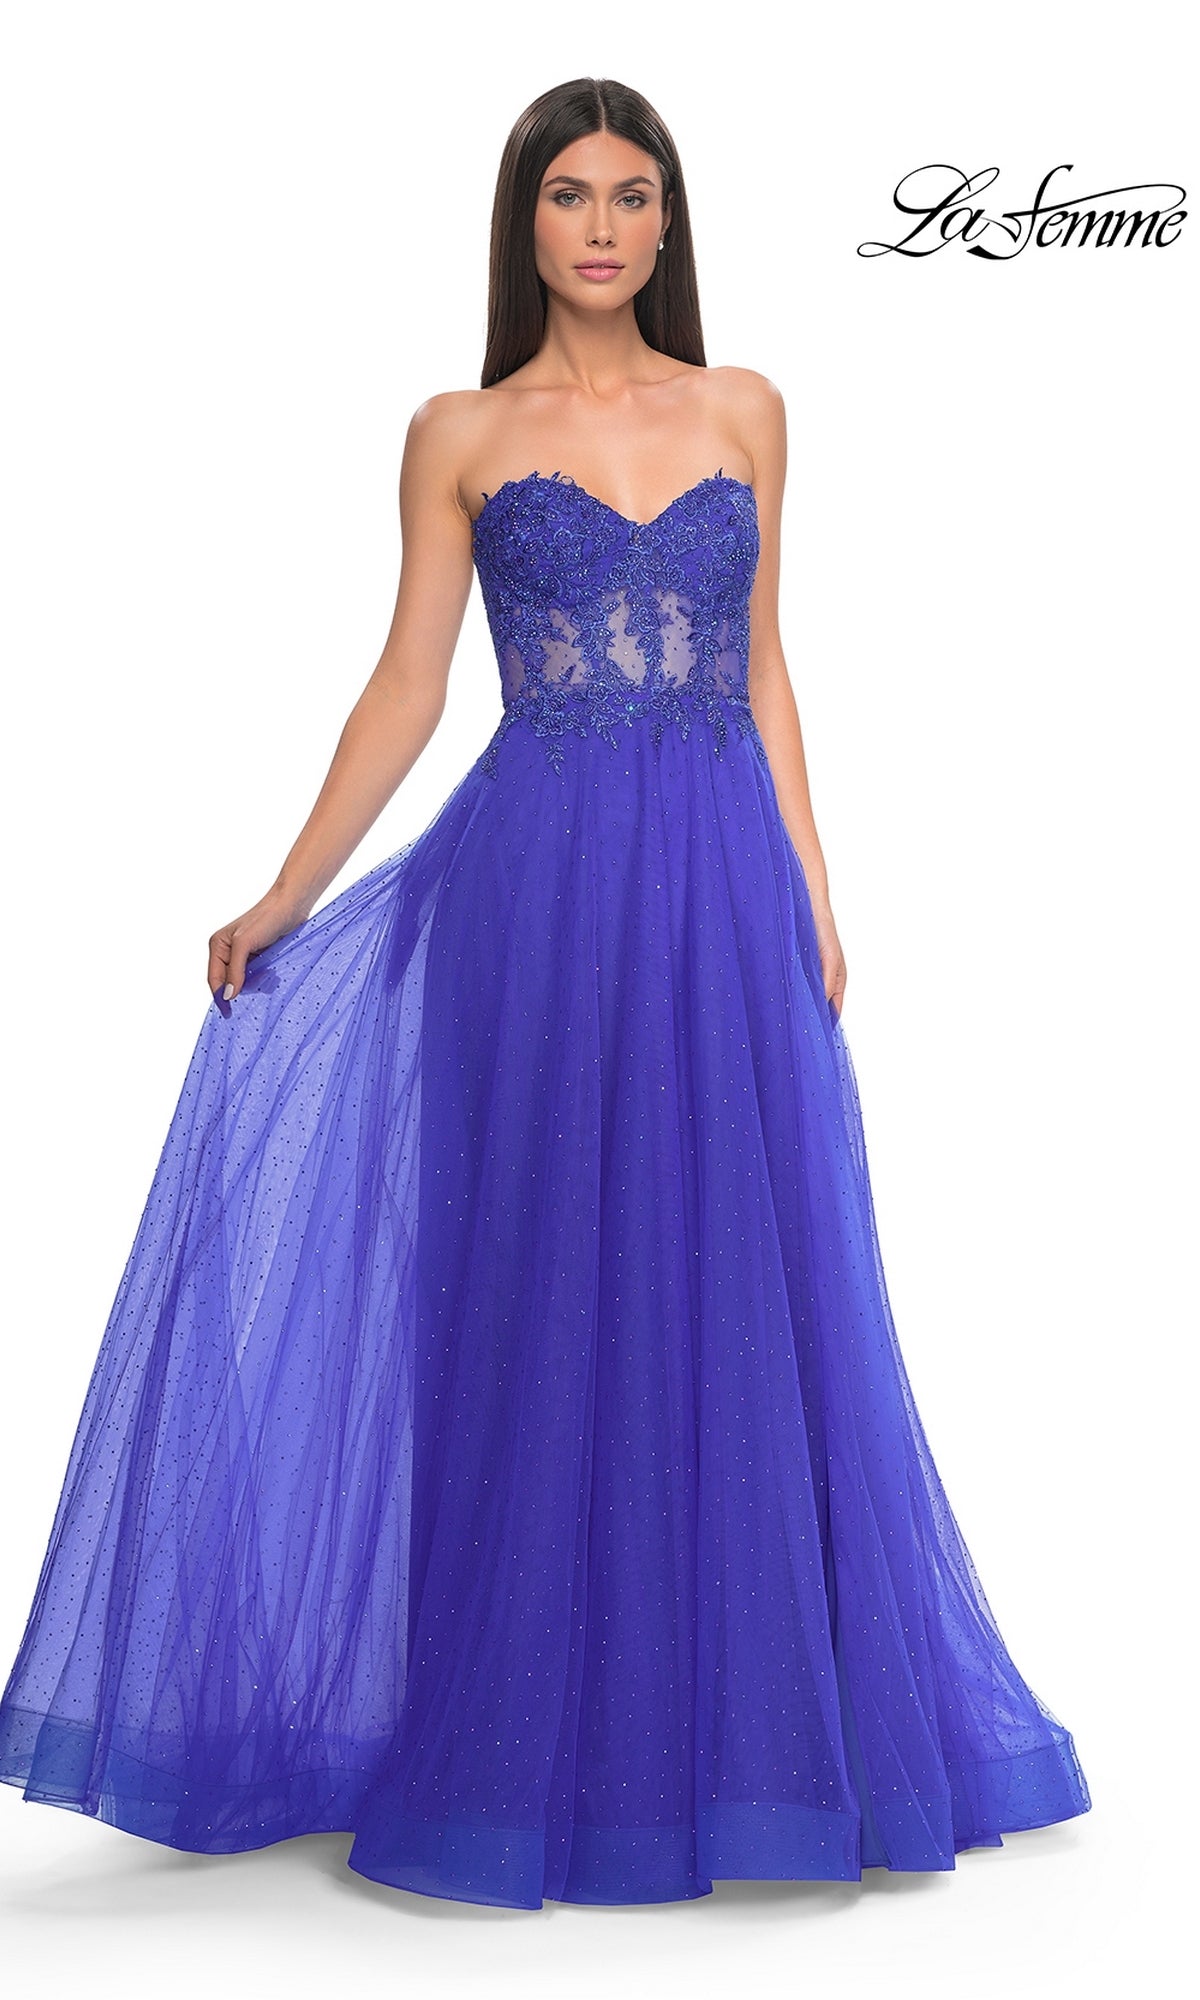  La Femme 32313 Formal Prom Dress